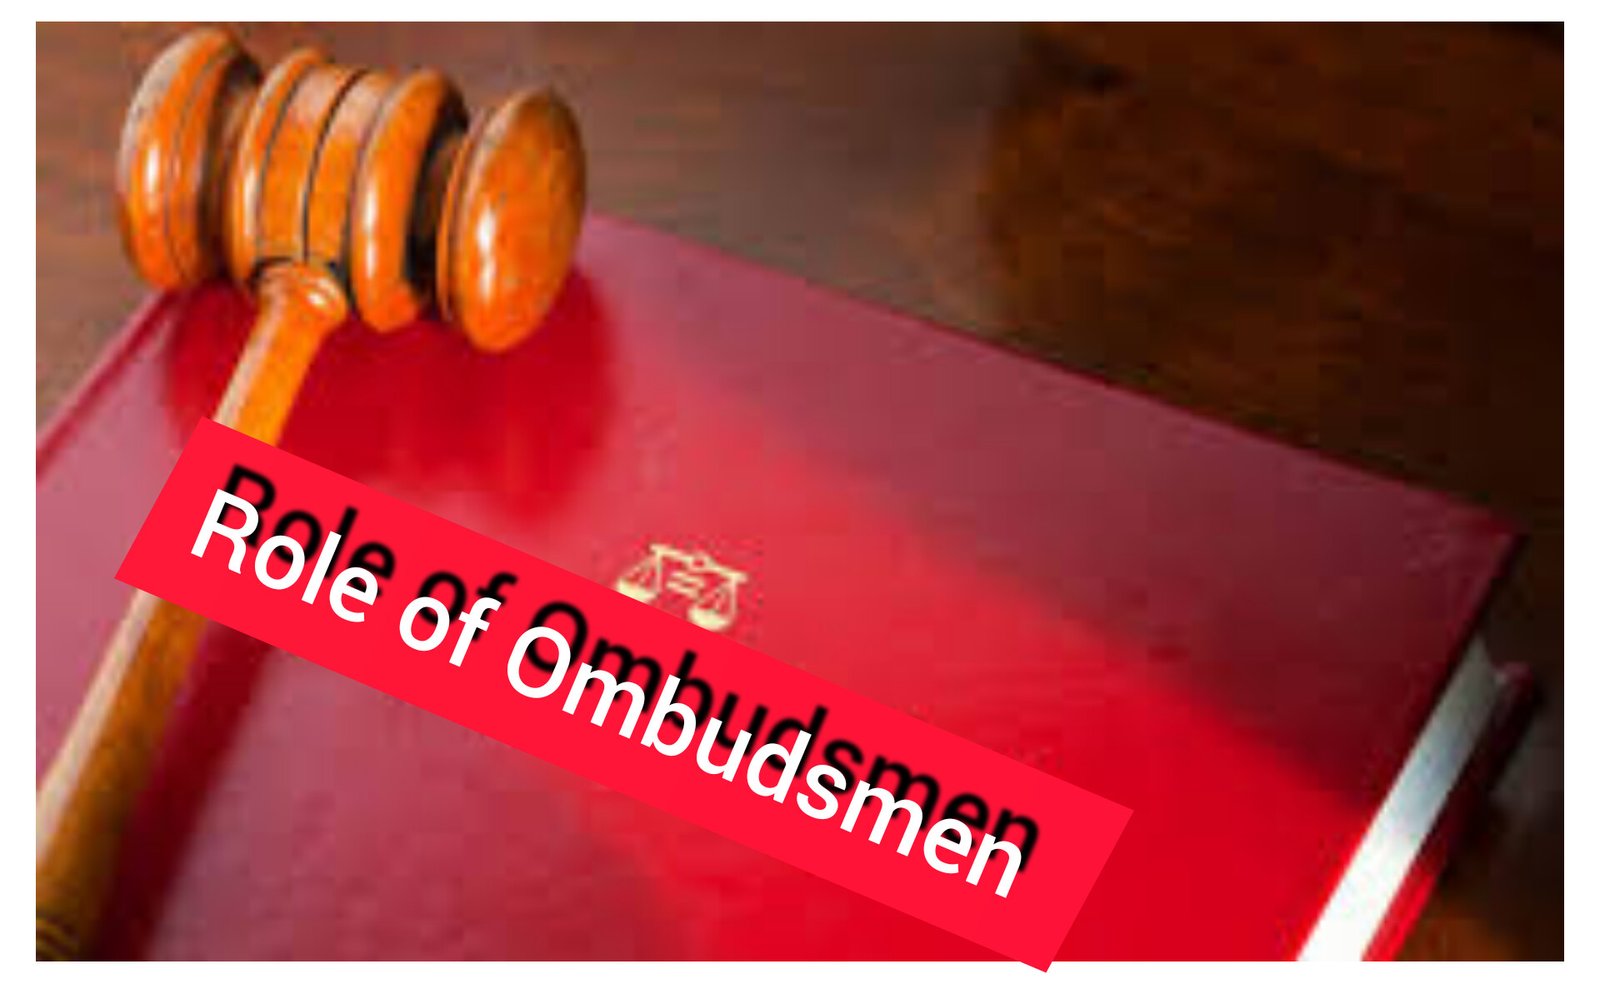 ombudsmen role